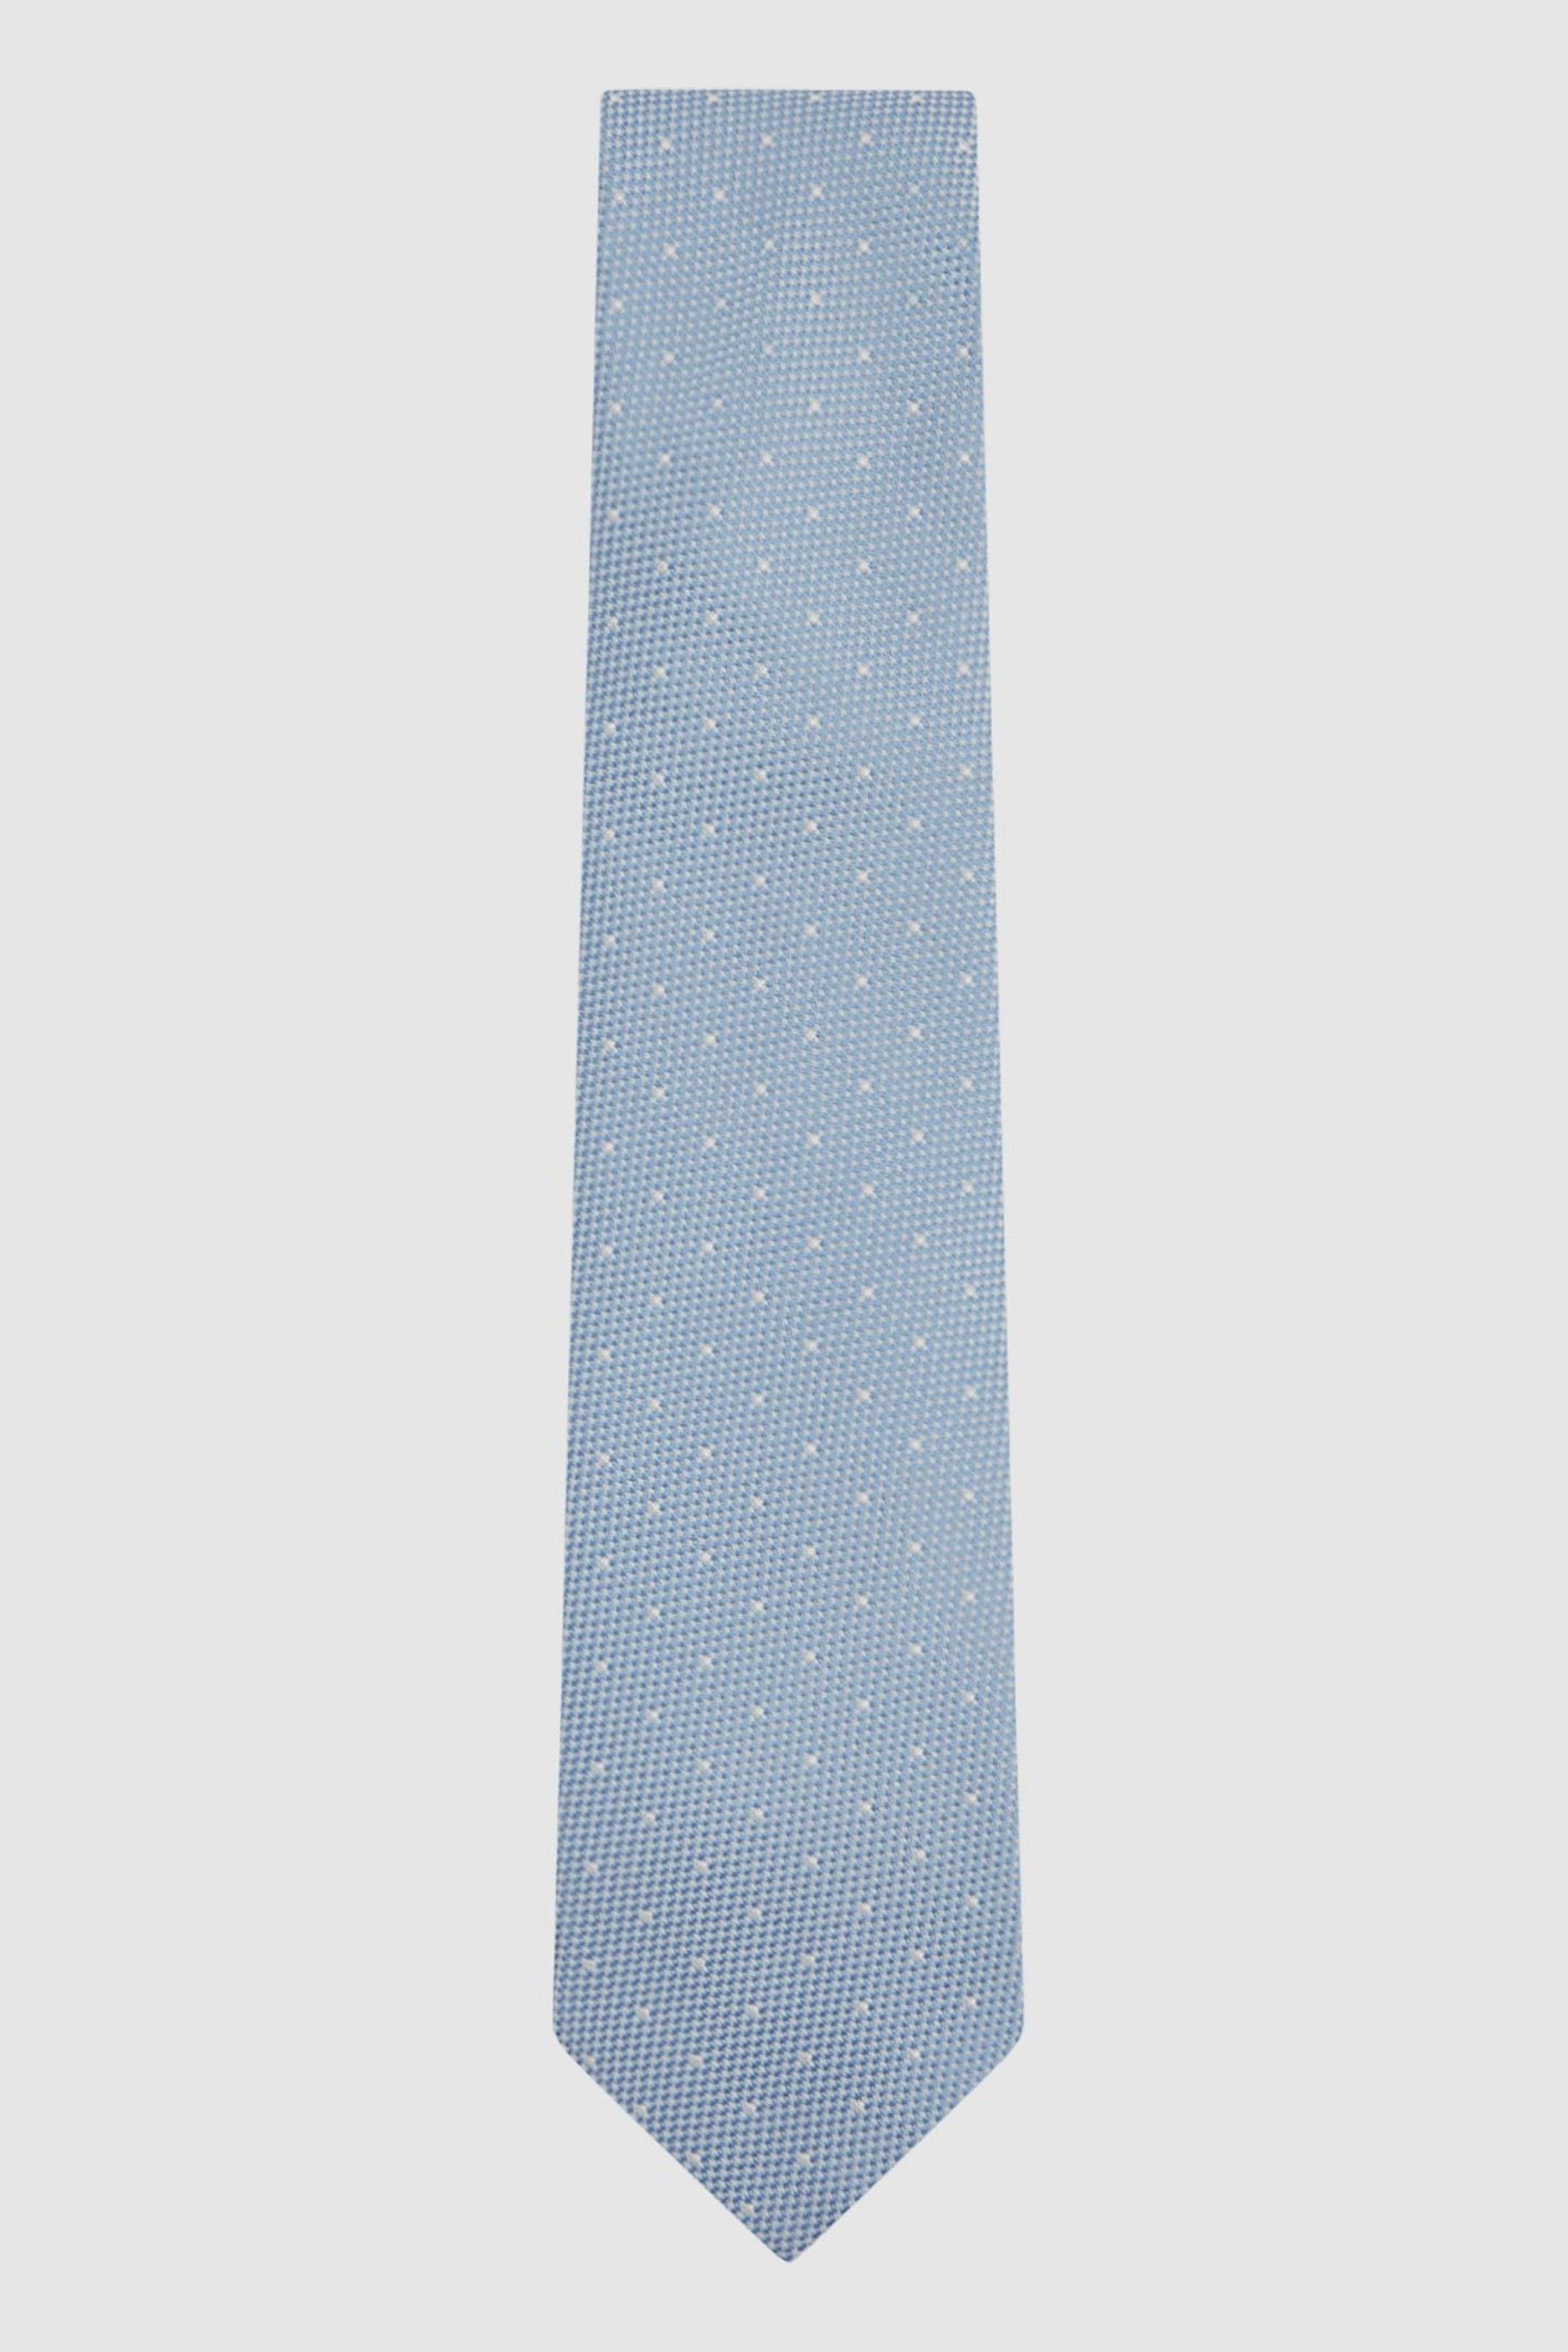 Reiss Liam - Soft Blue Polka Dot Tie, One